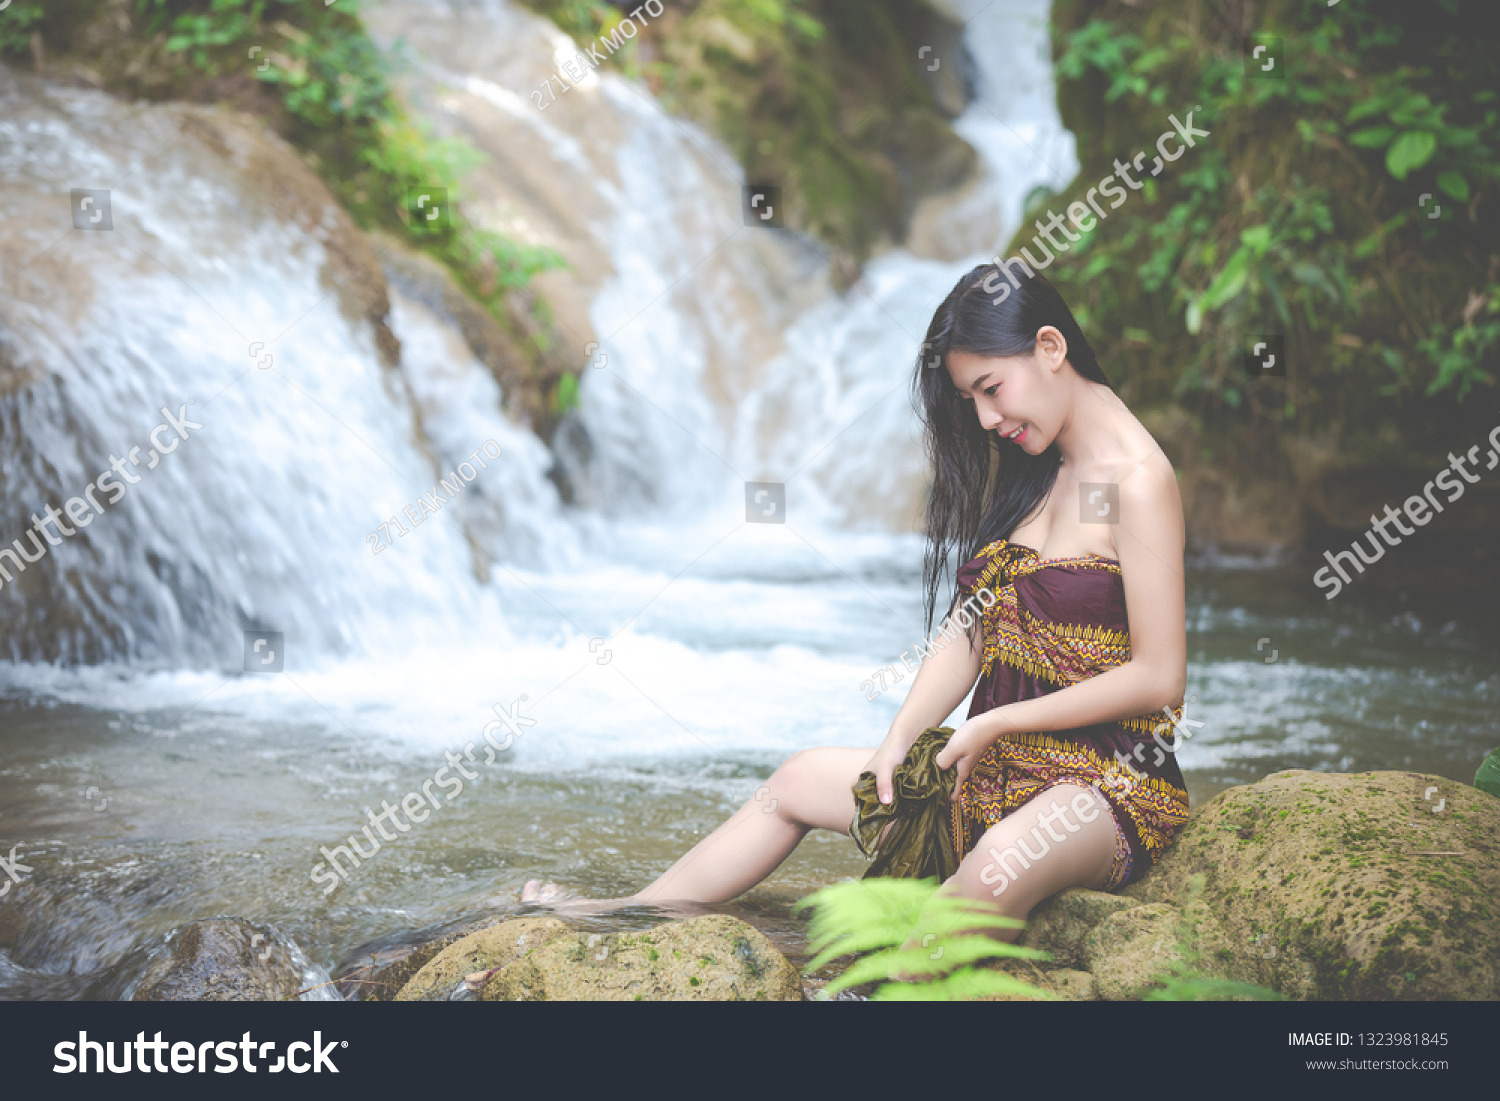 diana chaker recommends Women Bathing In Waterfalls